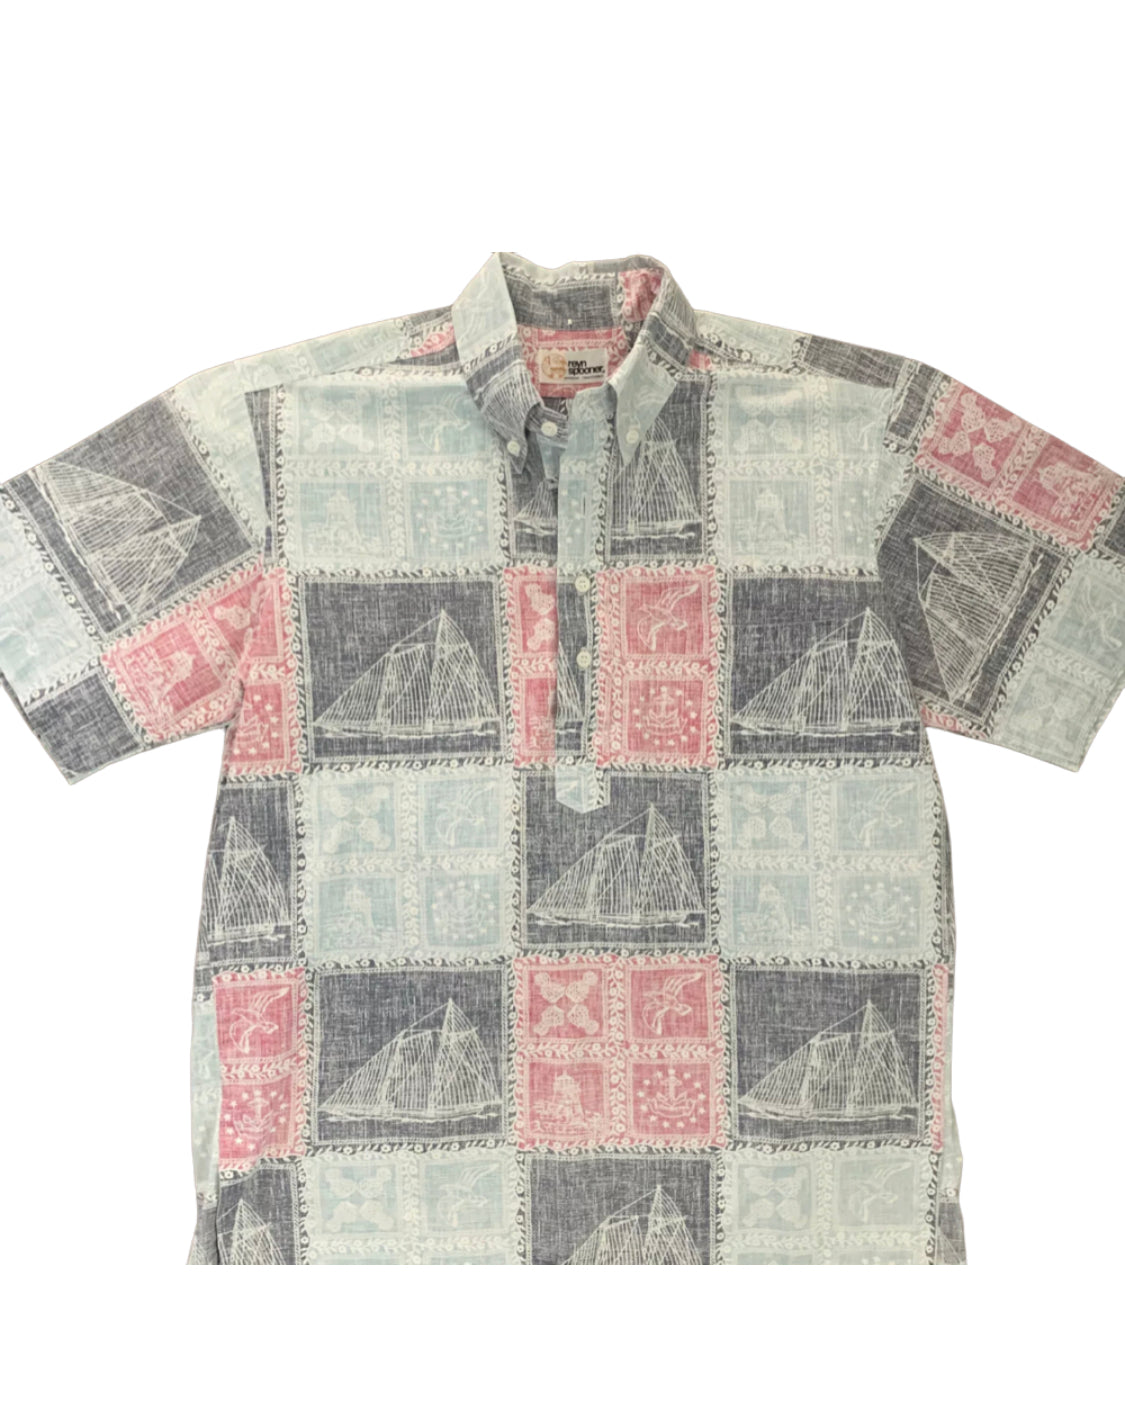 Vintage 80s 90s Reyn Spooner Fish Print Cotton Shirt sz M